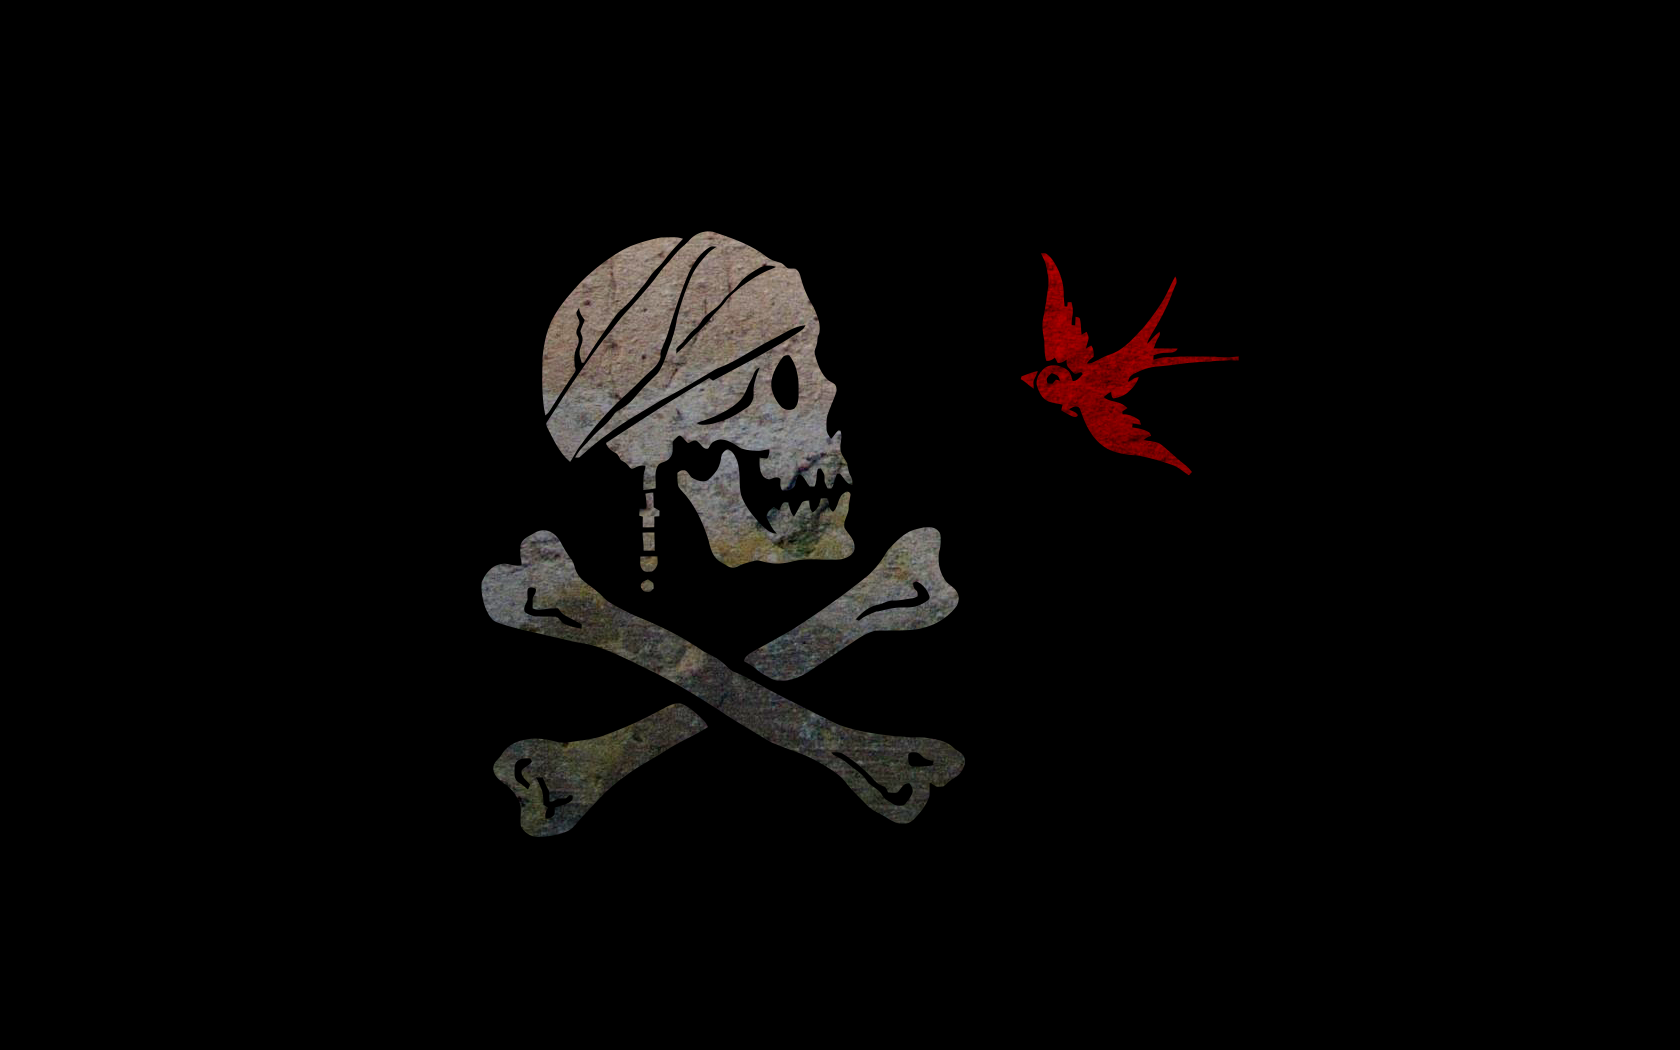 General 1680x1050 Pirates of the Caribbean Jack Sparrow Pirate Flag black background birds animals skull pirates movies minimalism